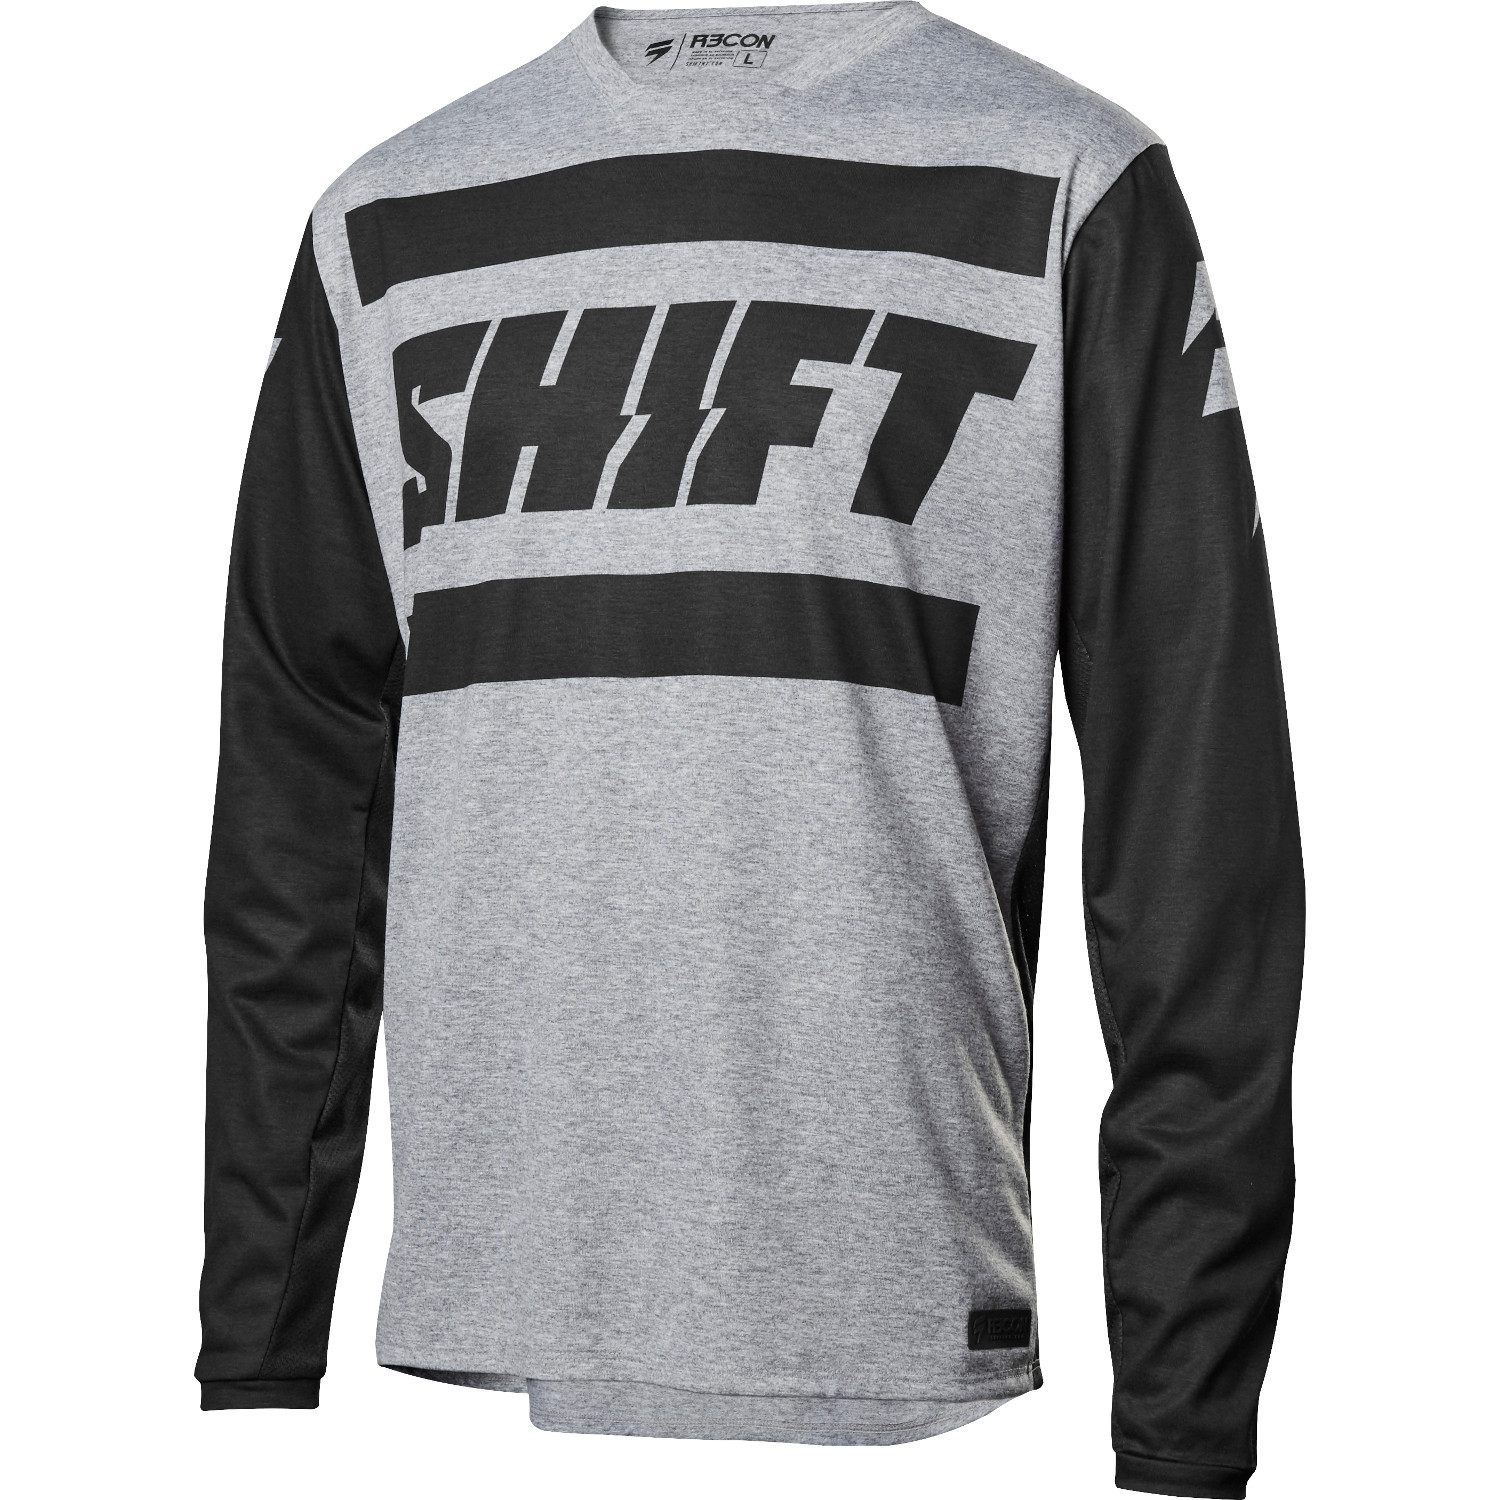 Shift Jersey Recon Drift Strike - Light Grey